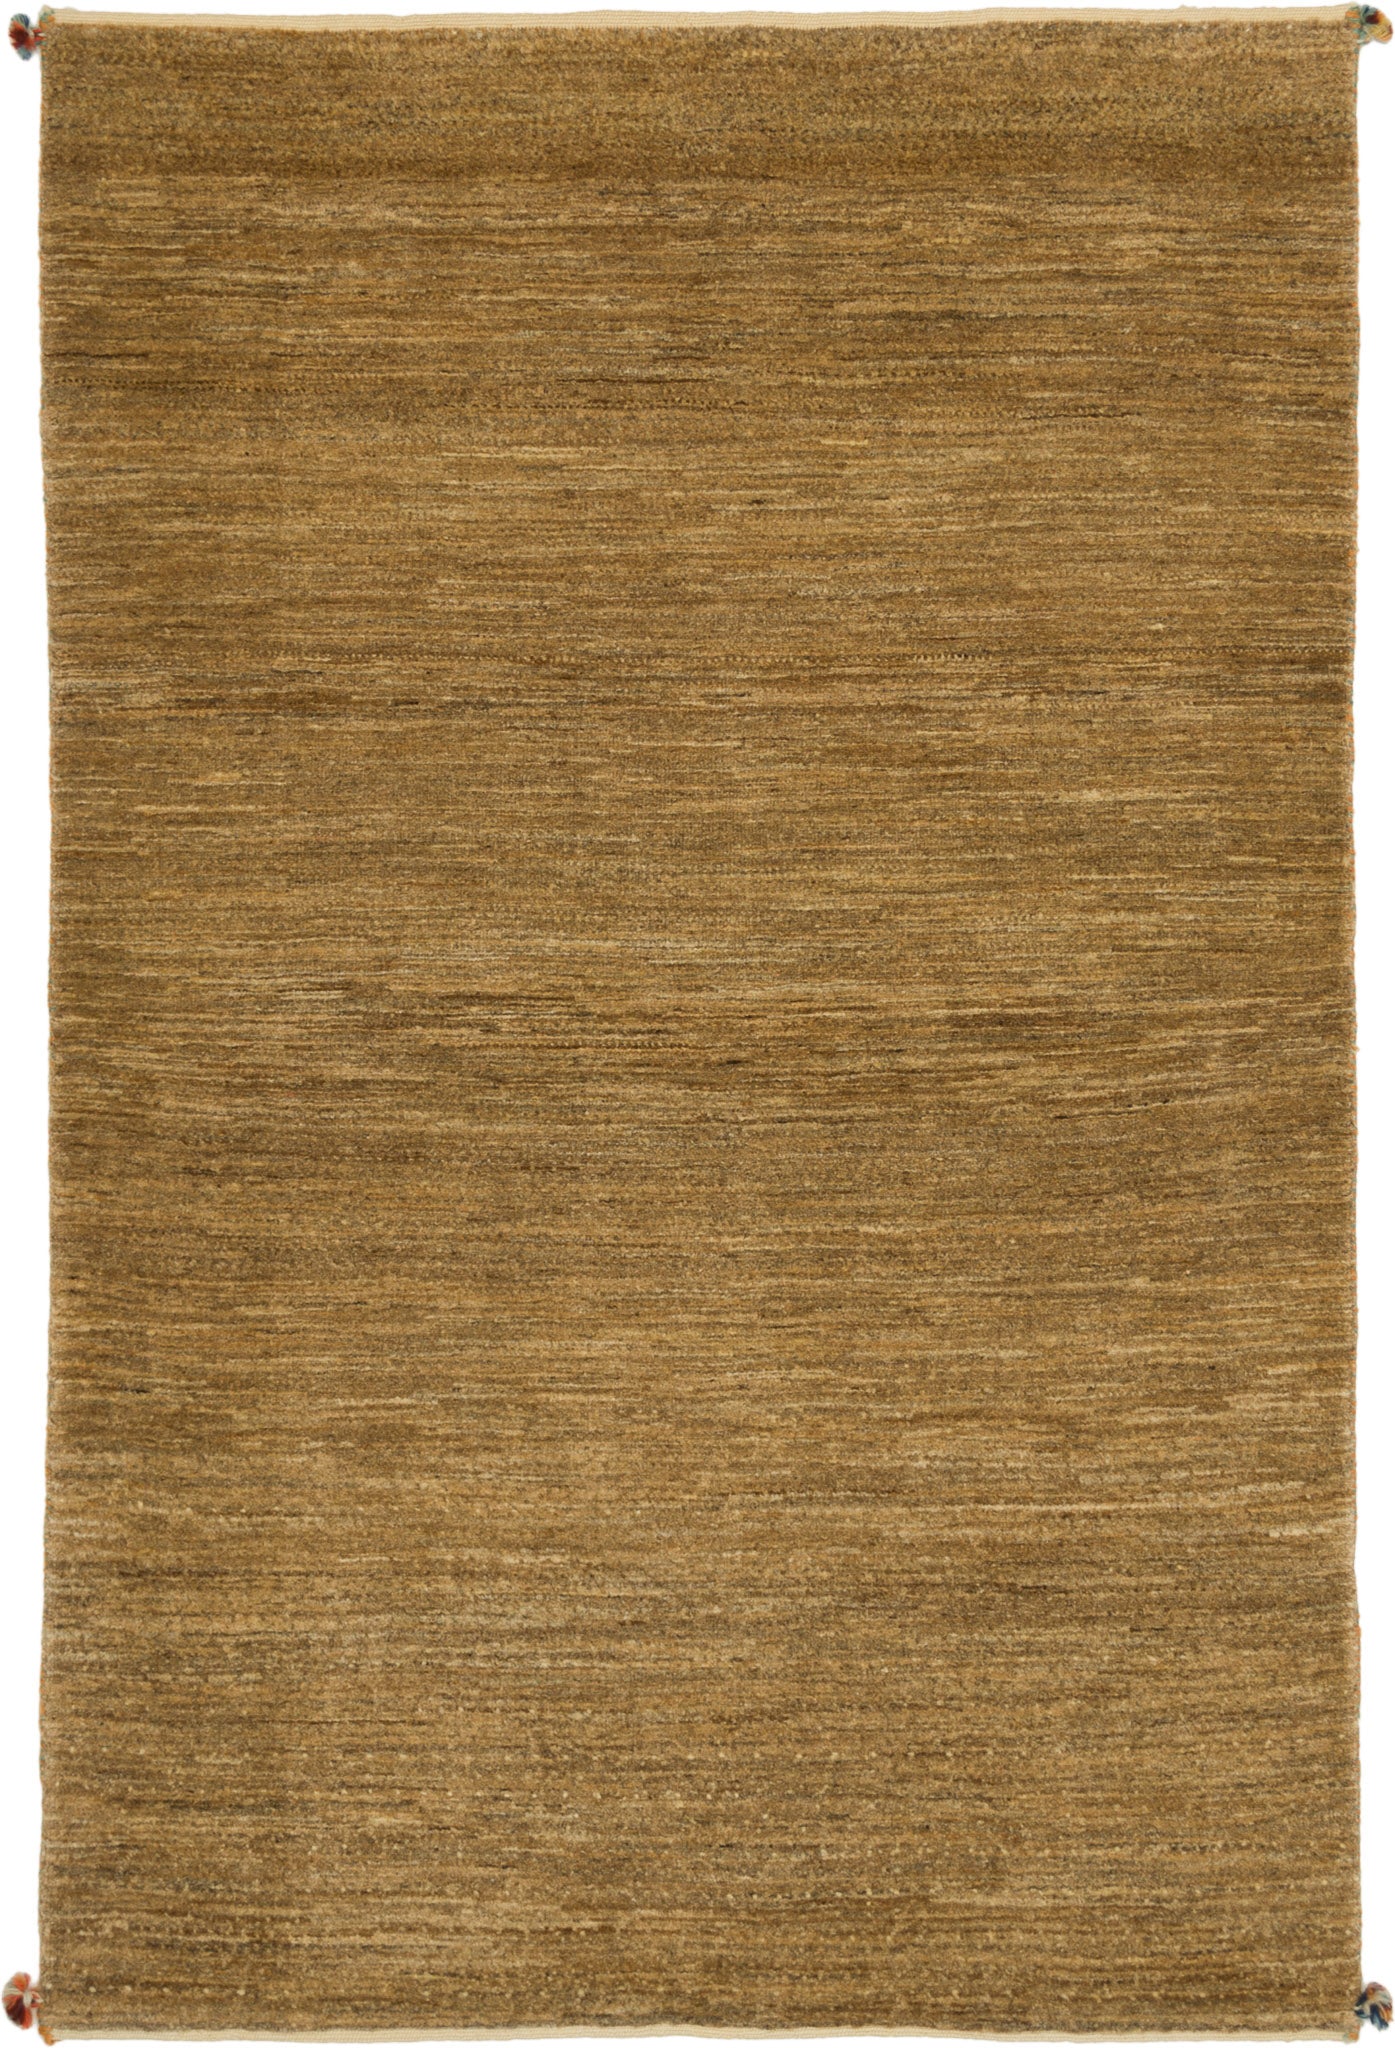 Gaschgai, 148 × 95 cm